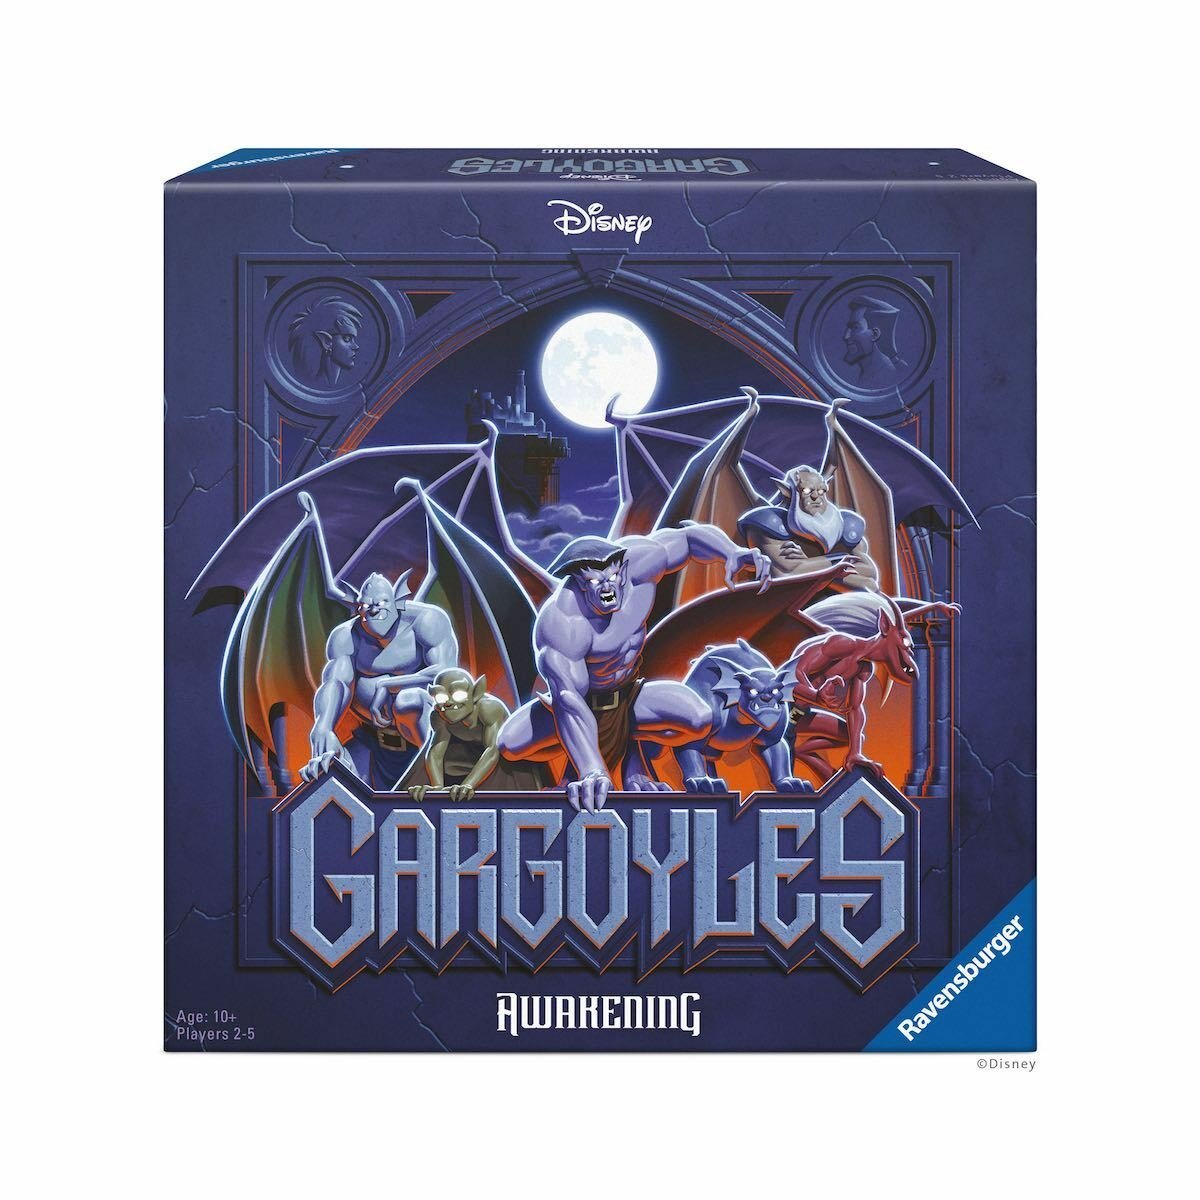 Il box con il gioco Gargoyles: Awakening